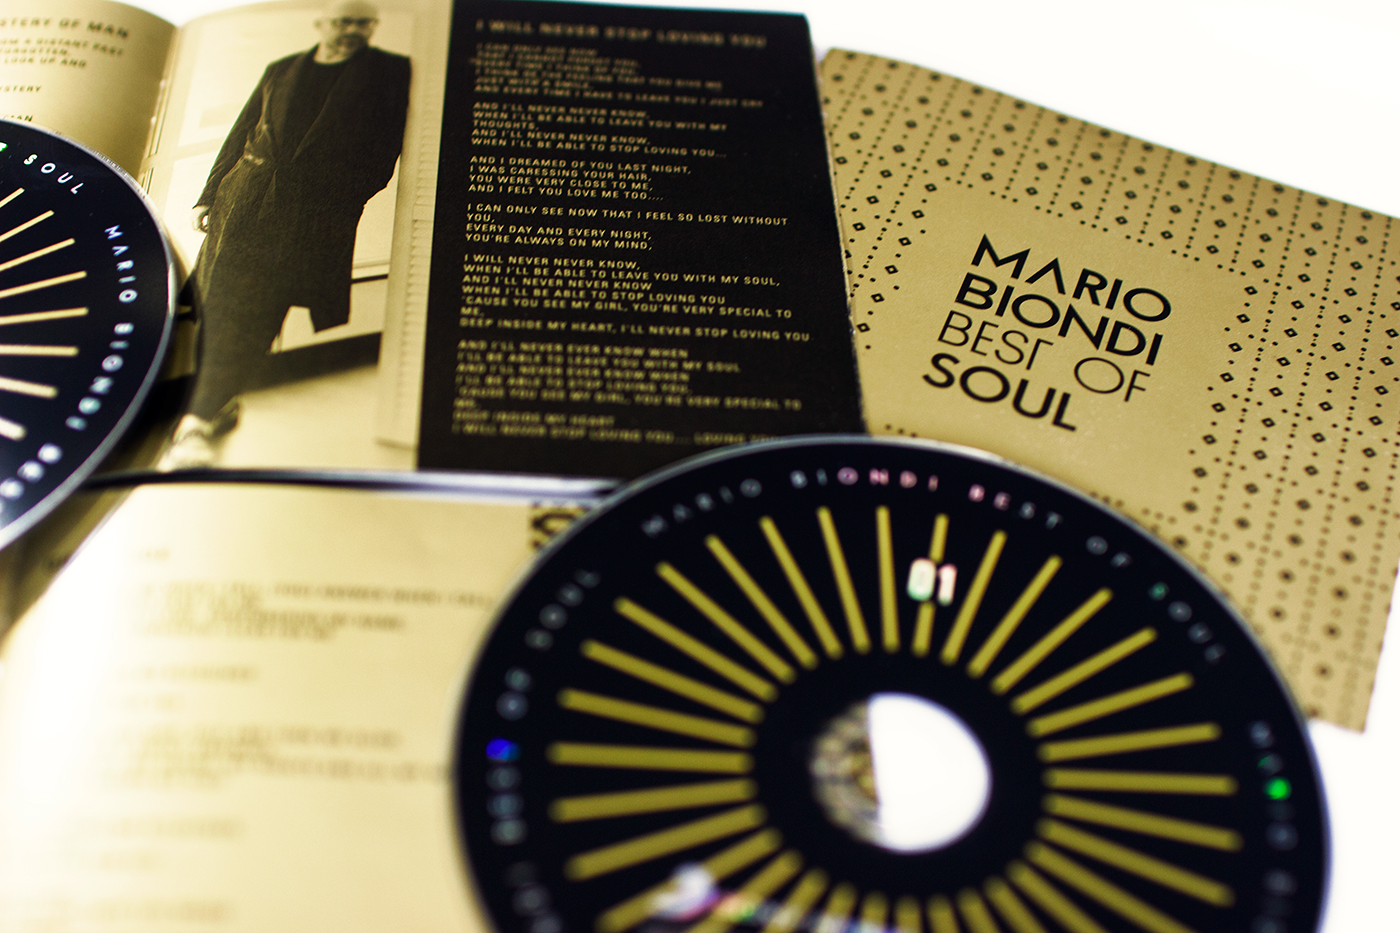 Mario Biondi - best of soul (Sony Music Italy)